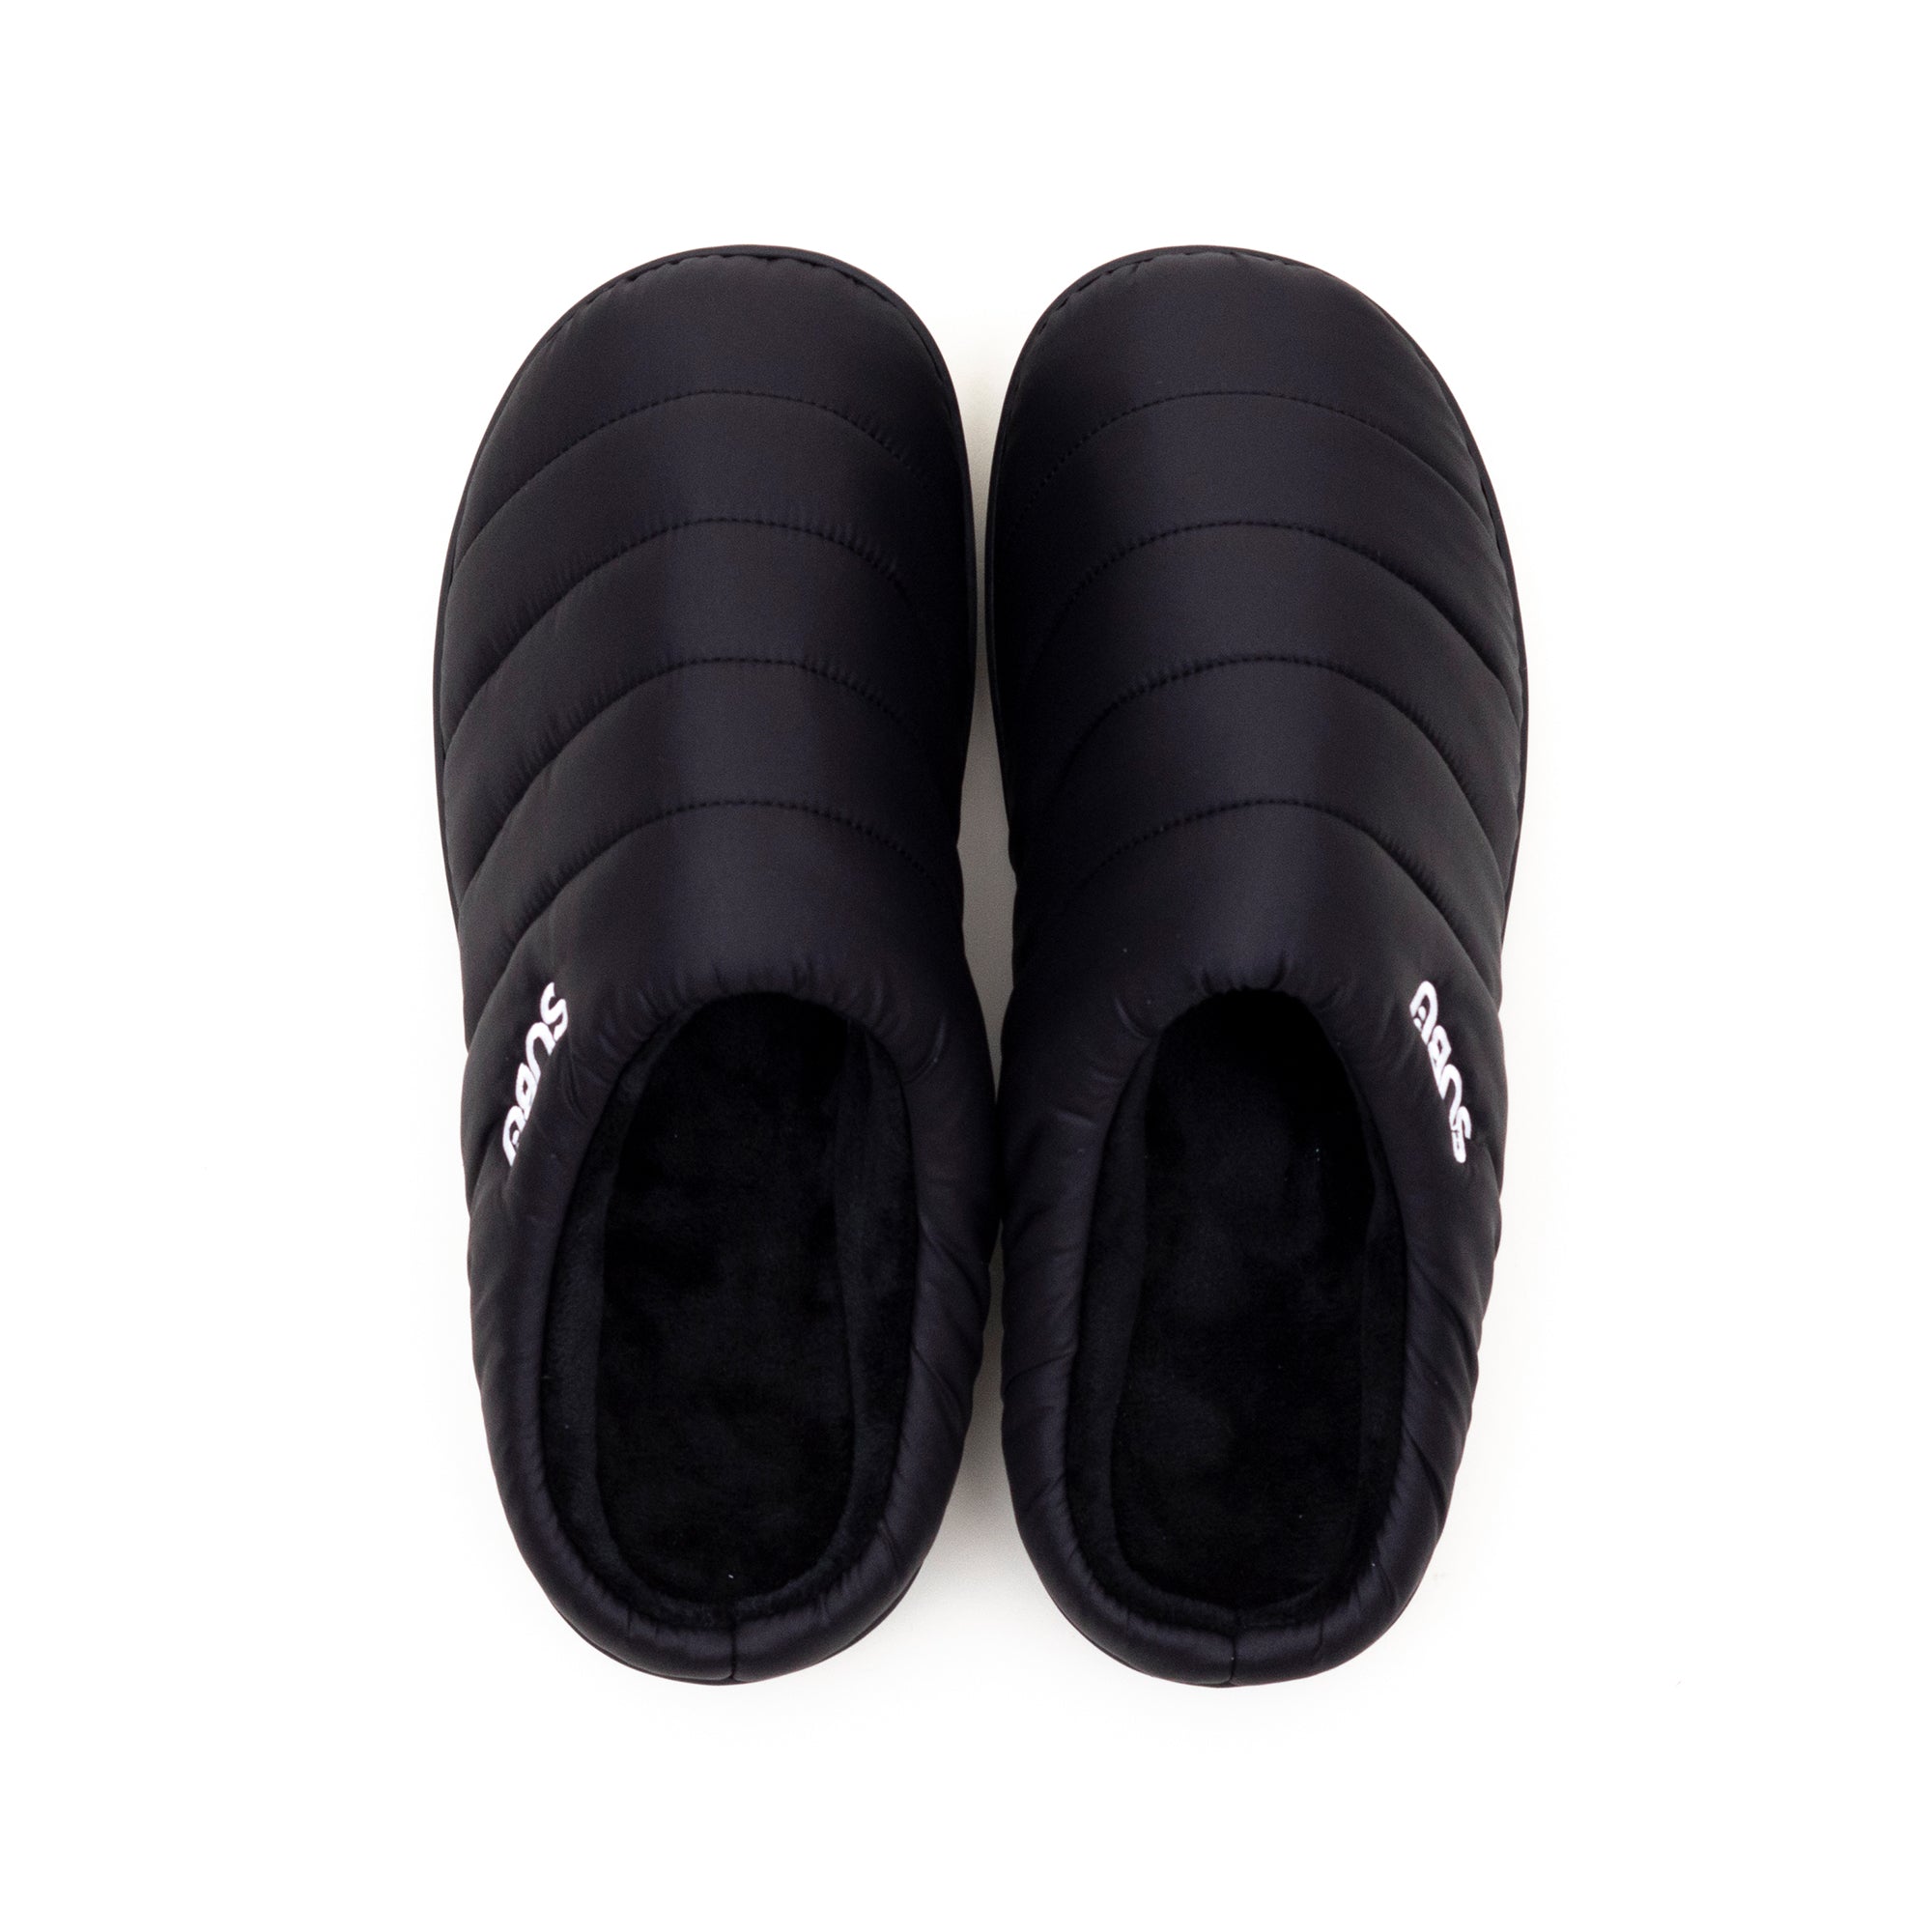 Subu Winter Slippers - Black